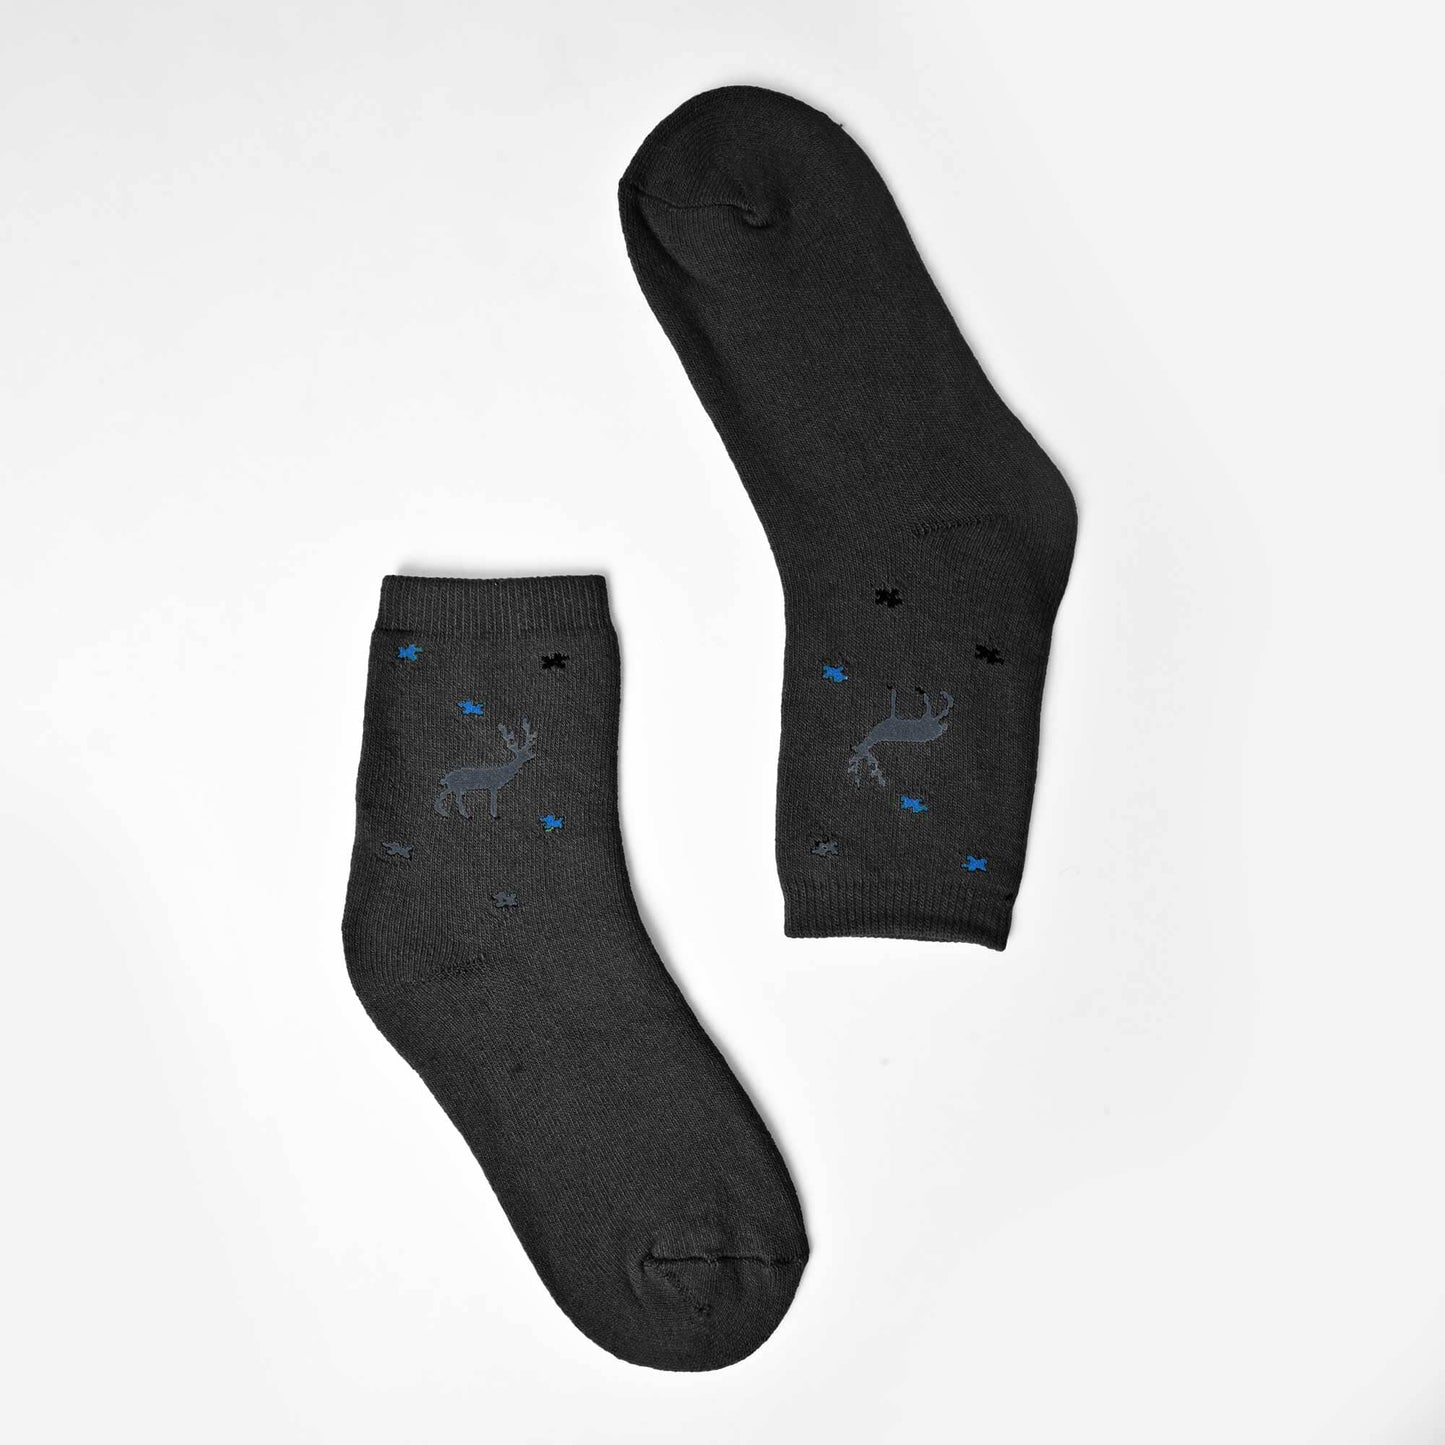 Tazoo Men's Deer Printed Crew Socks Socks SRL D2 EUR 36-41 